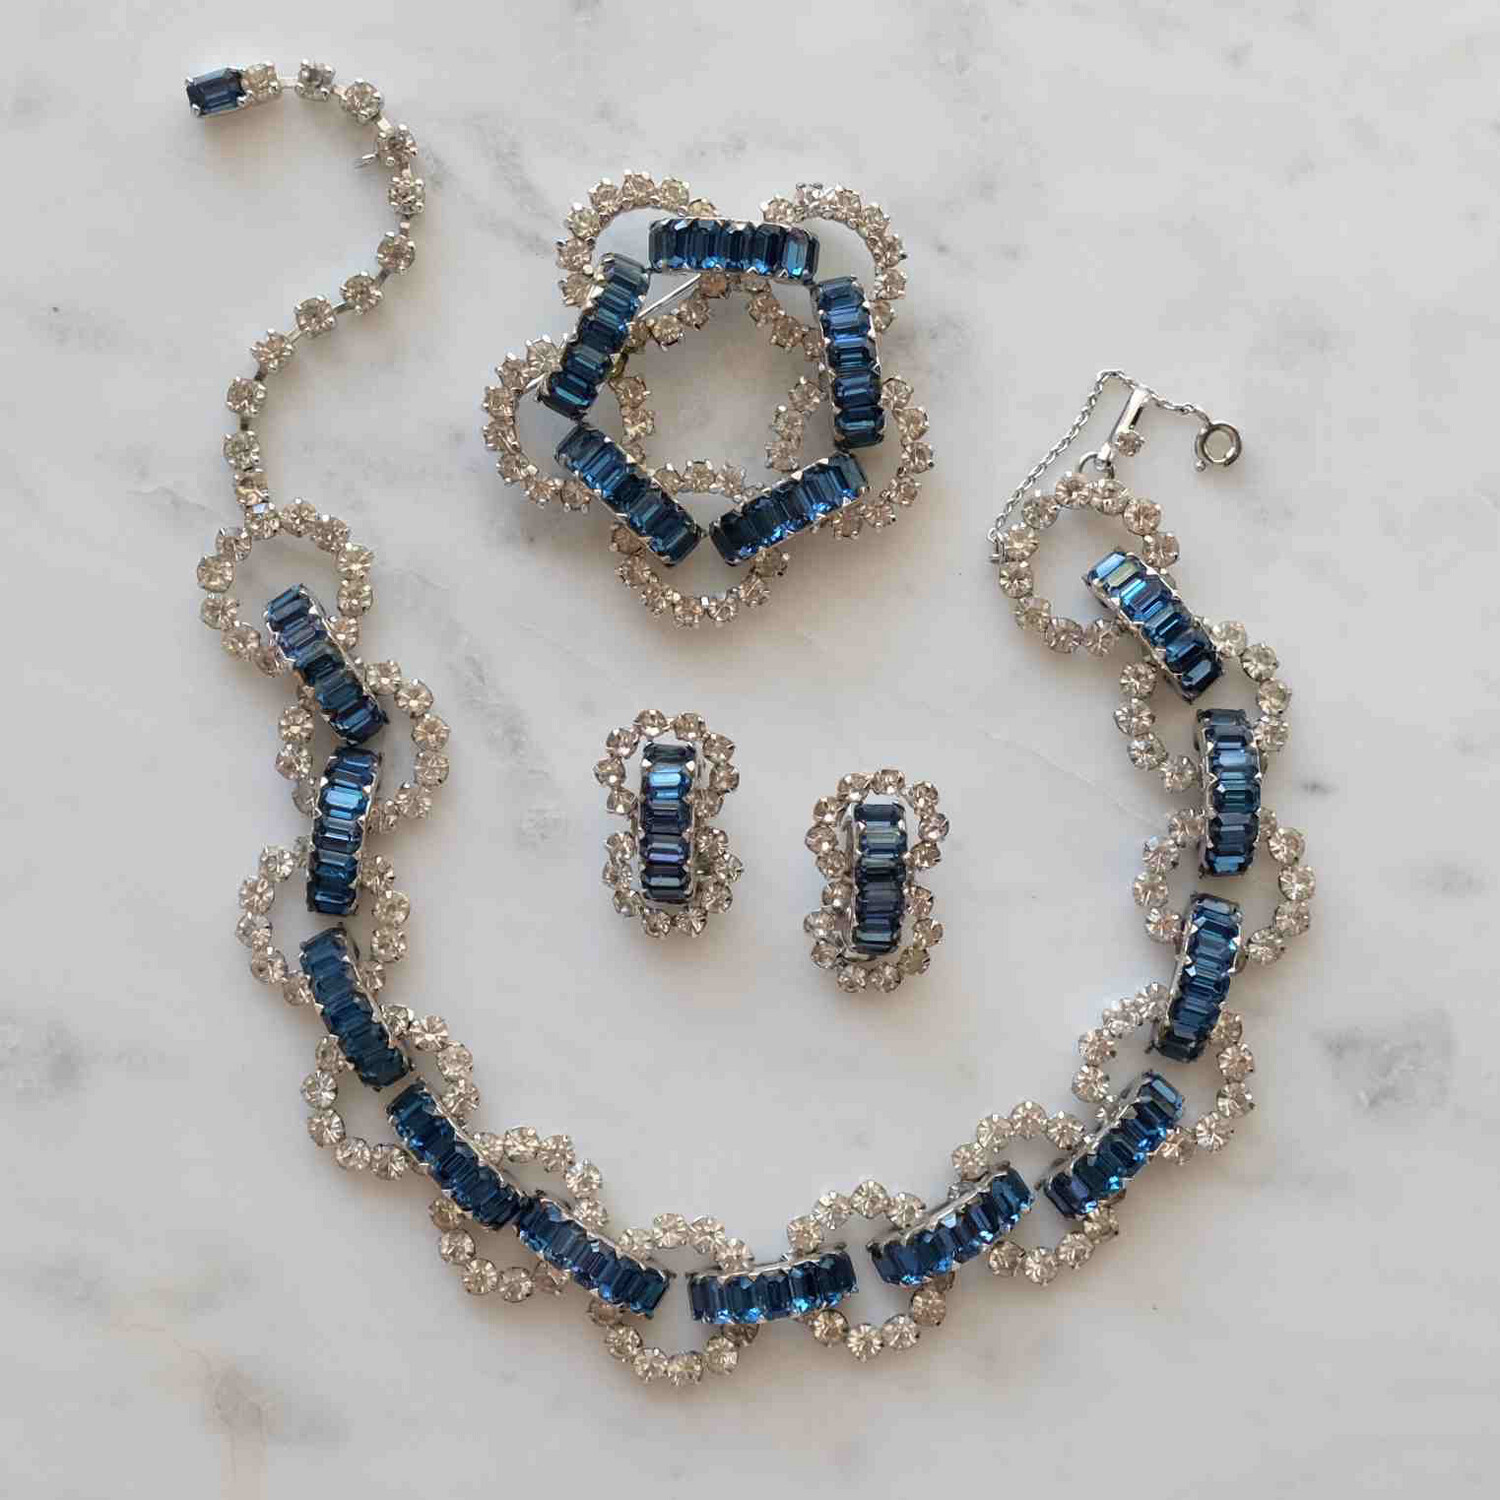 Vintage Christian Dior By Mitchel Maer Blue Rhinestones Set Brooch, Necklace, Earrings 1950’s